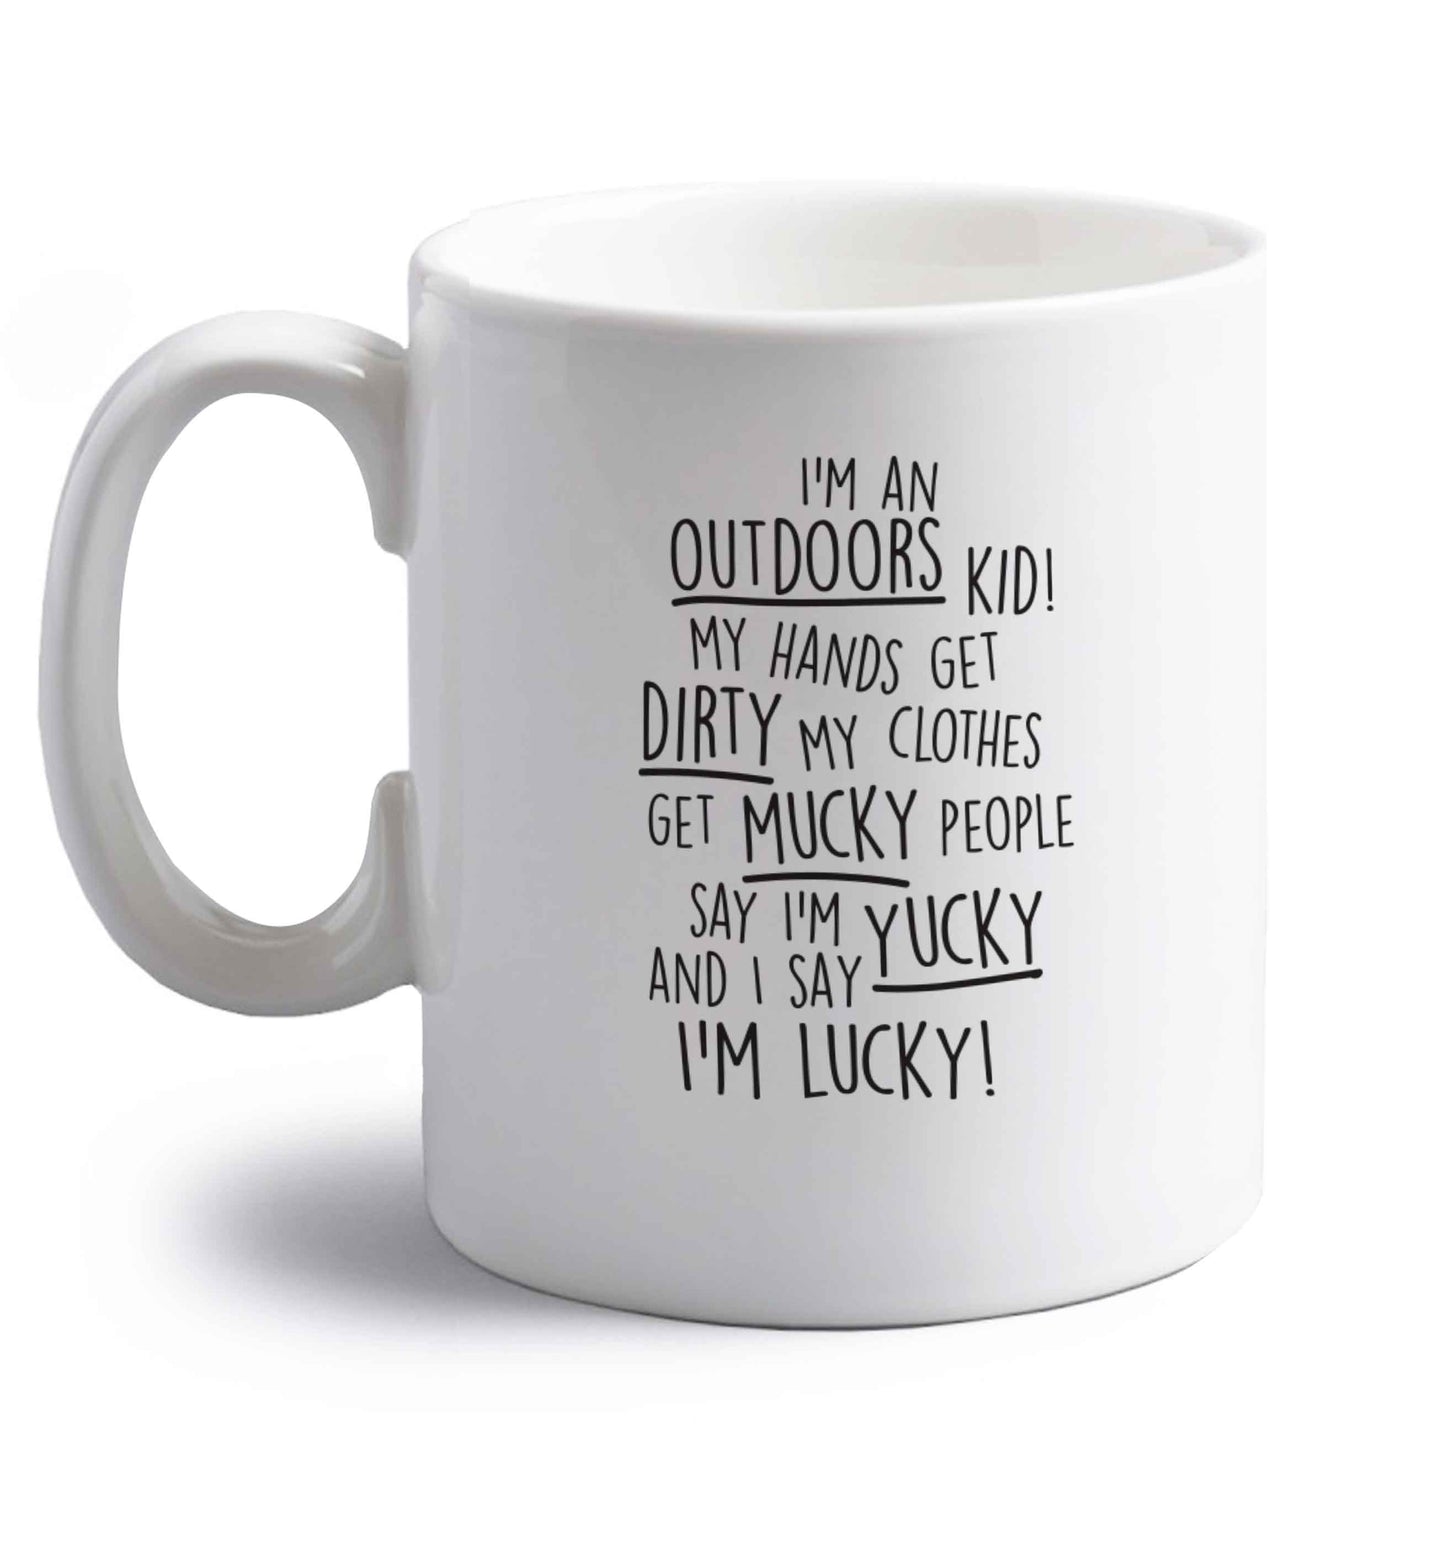 I'm an outdoors kid poem right handed white ceramic mug 